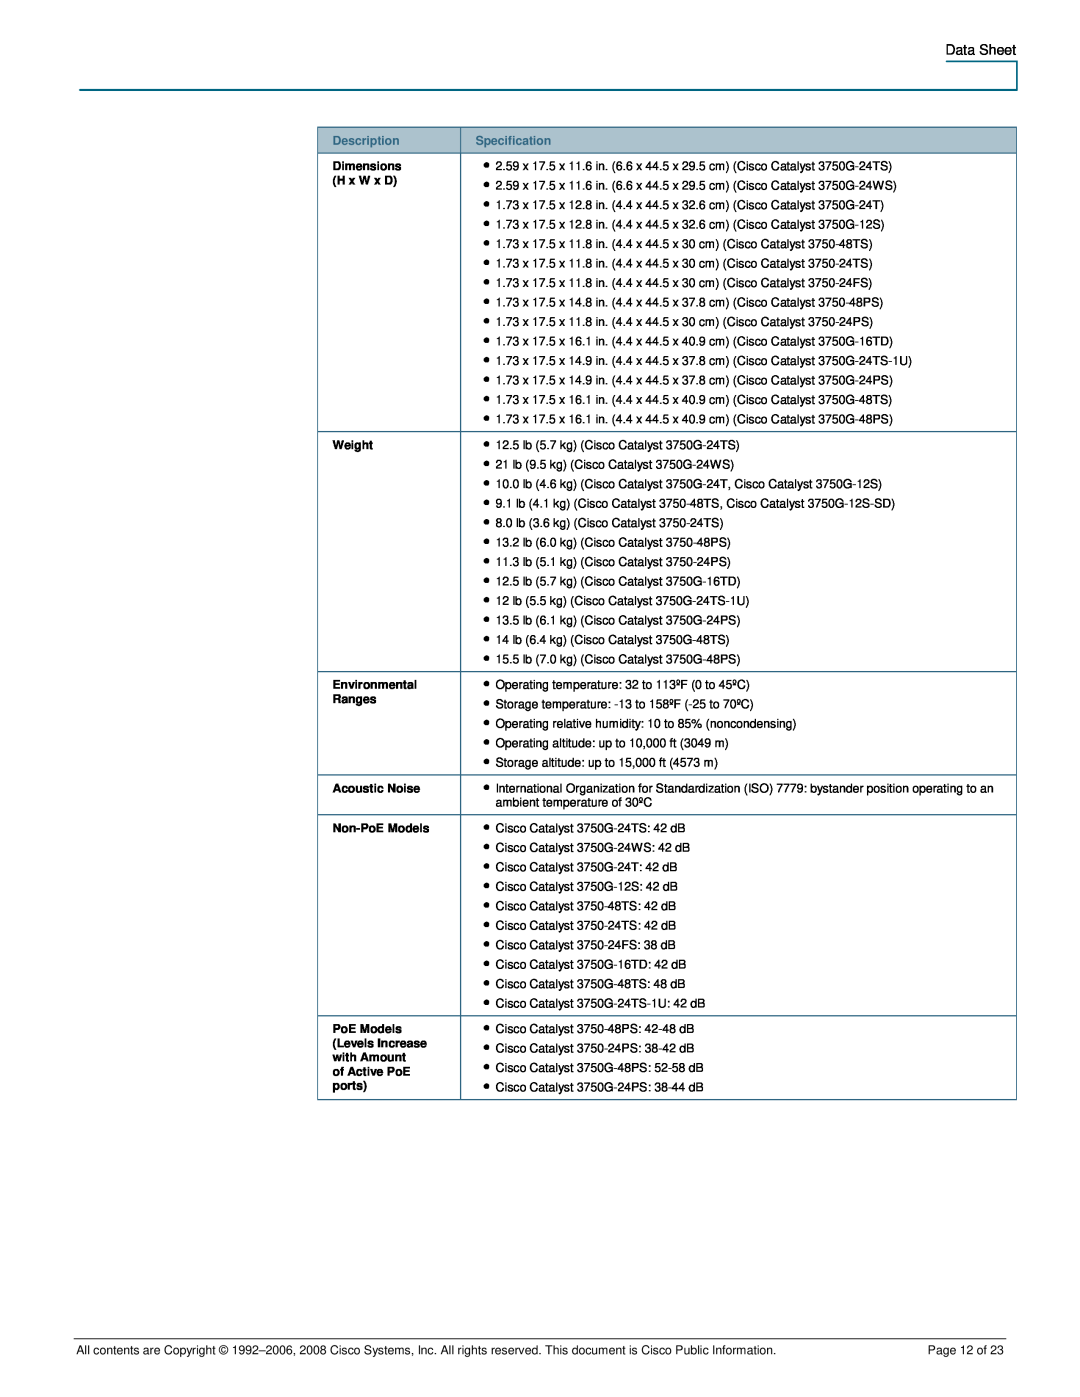 Cisco Systems 3750-24PS, 3750-48PS manual Description, Specification, Dimensions 